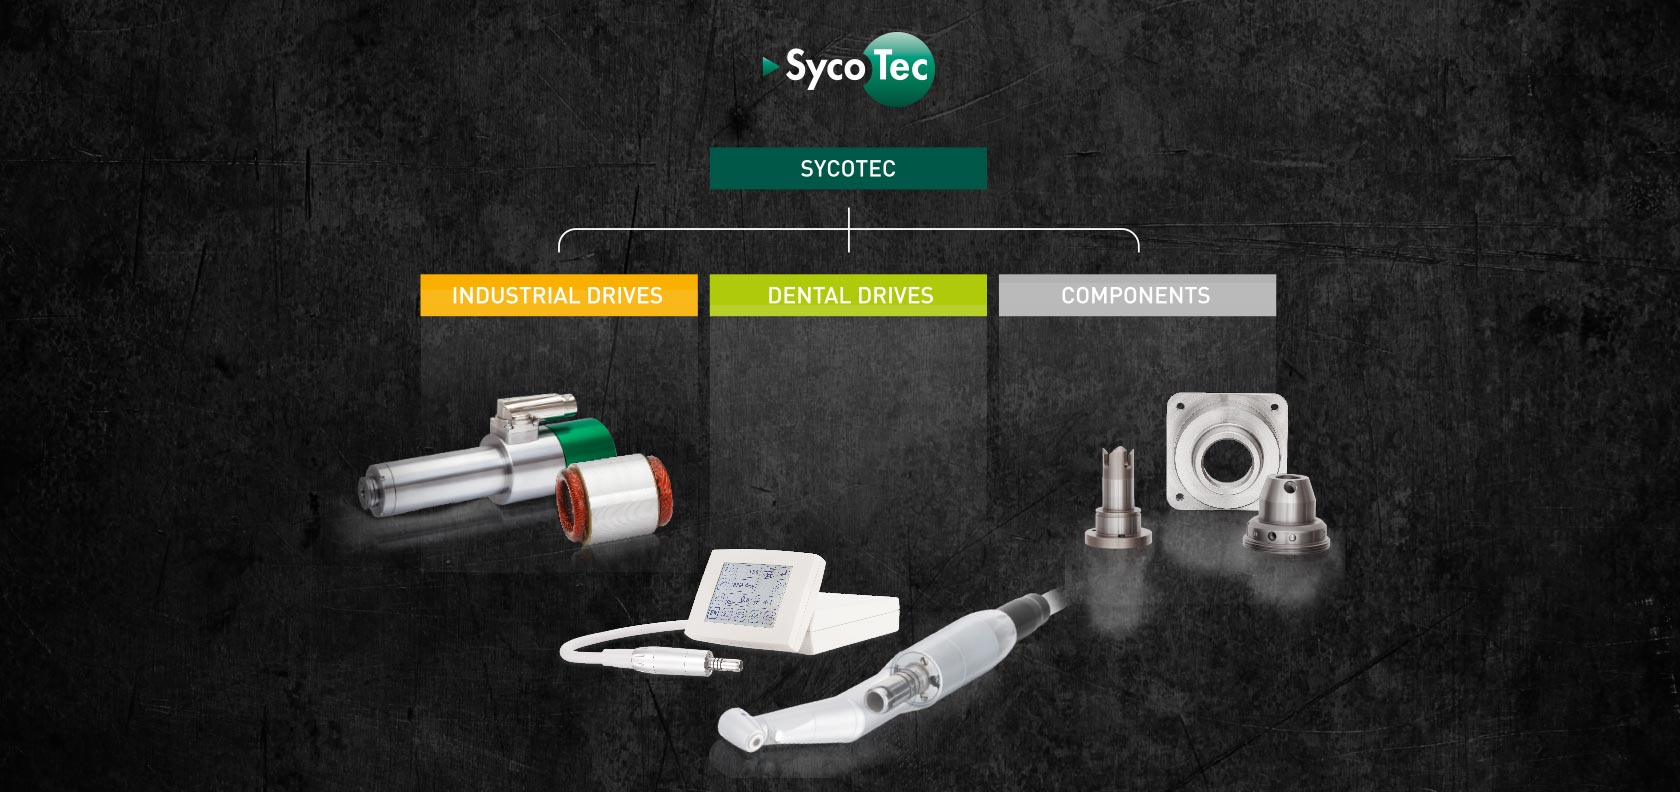 SycoTec Corporate Design - Business Units